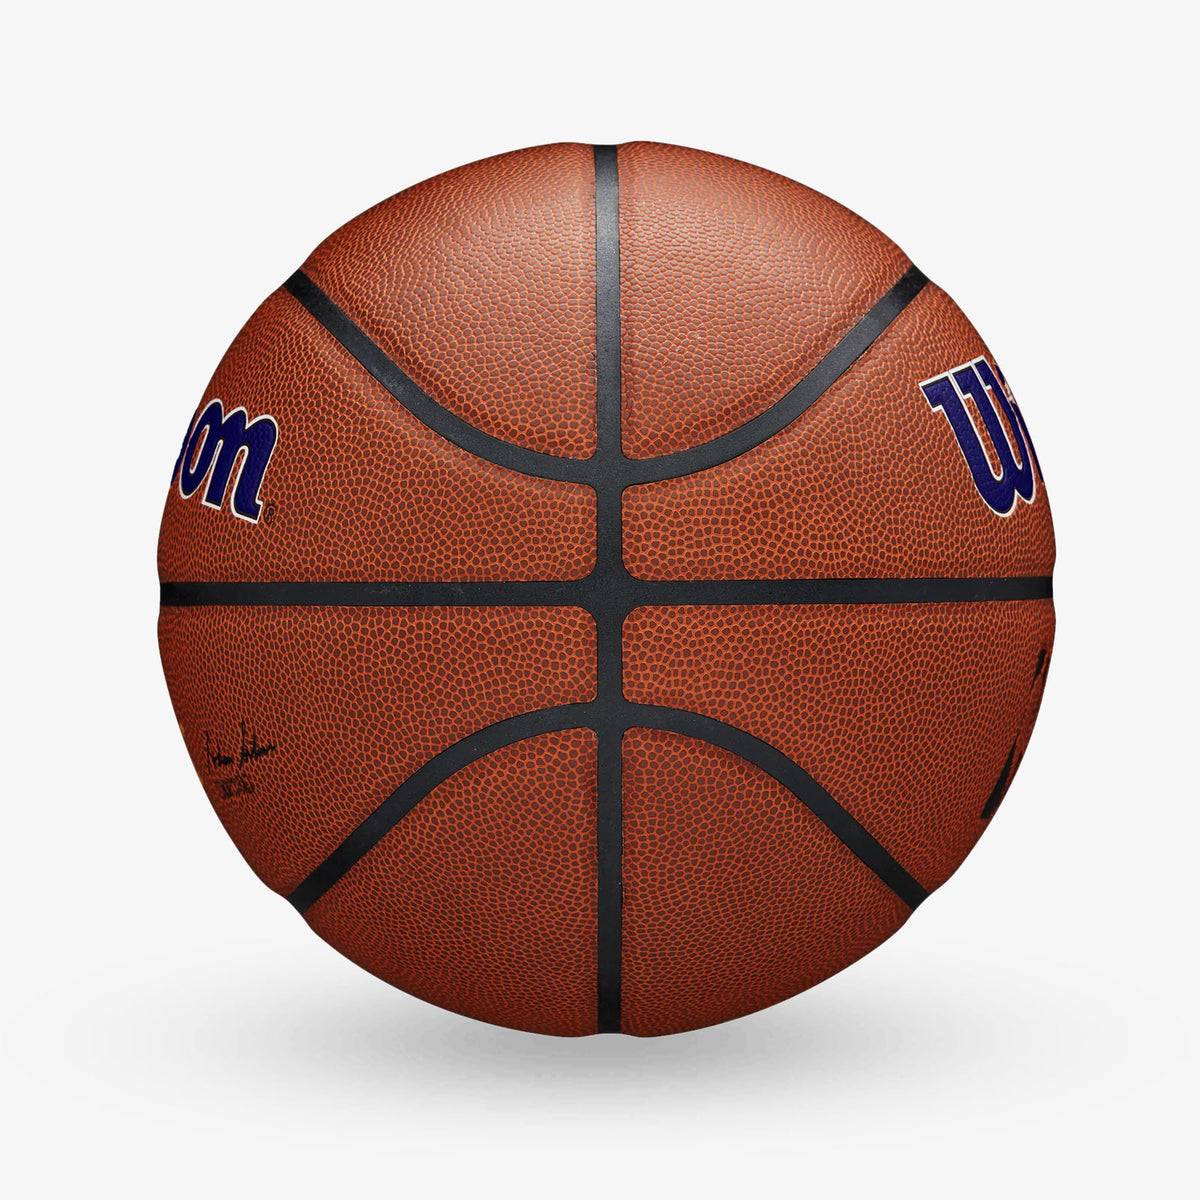 Phoenix Suns NBA Team Alliance Basketball - Size 7